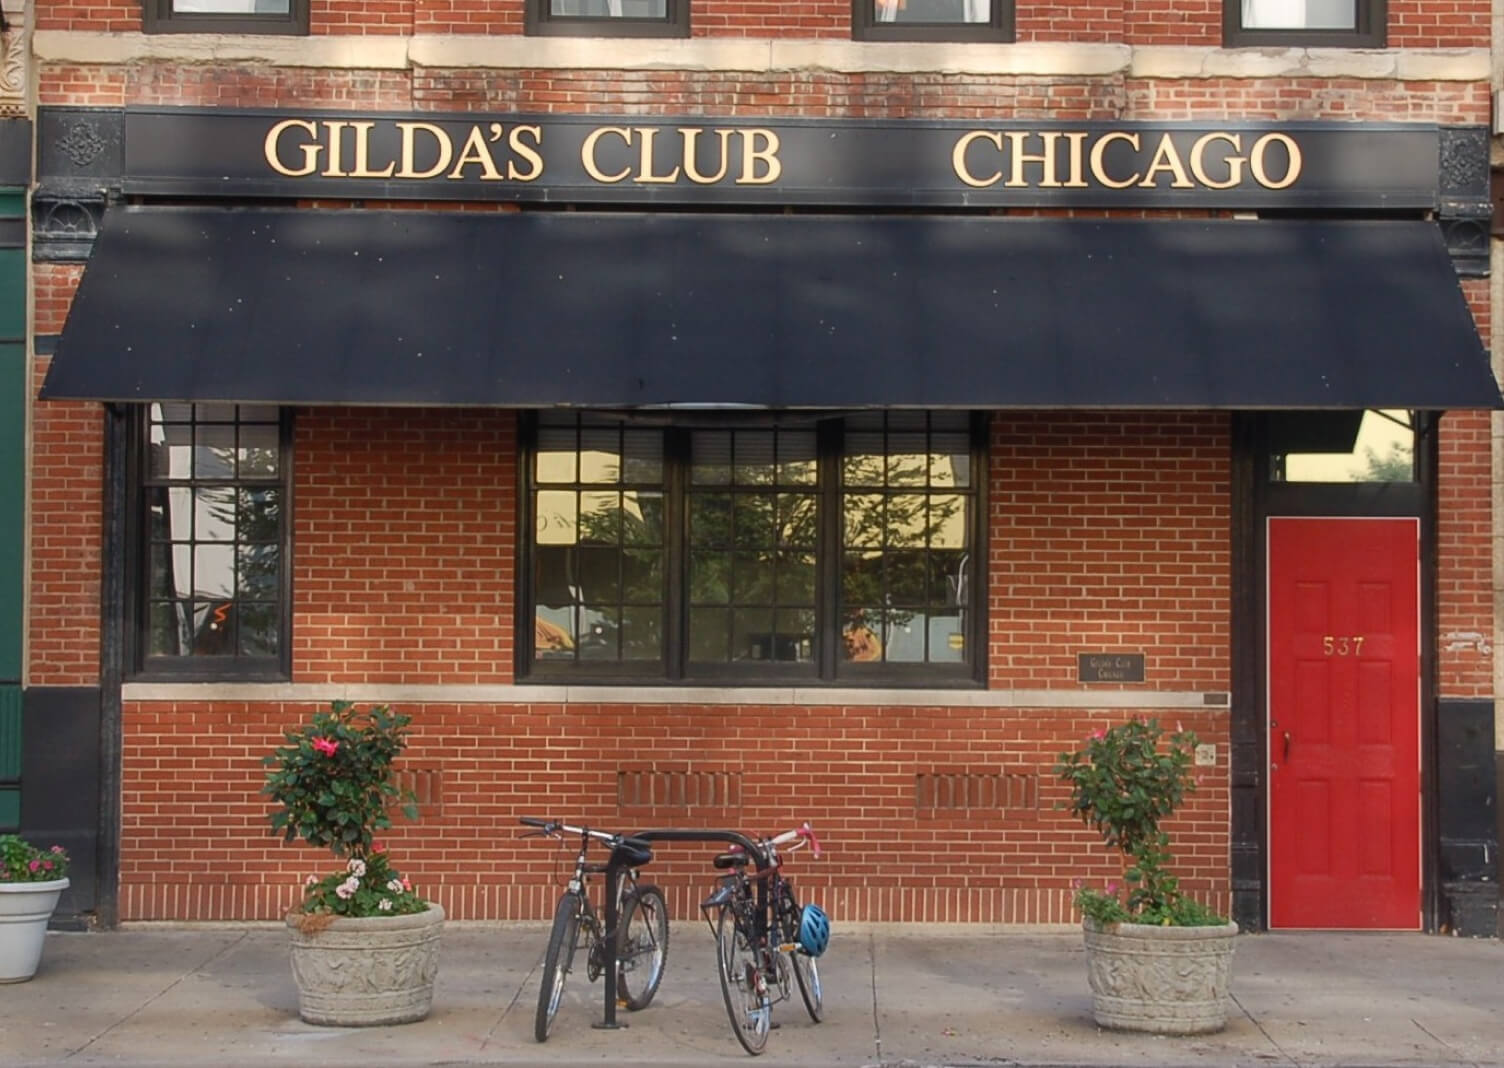 Gilda's Club Chicago